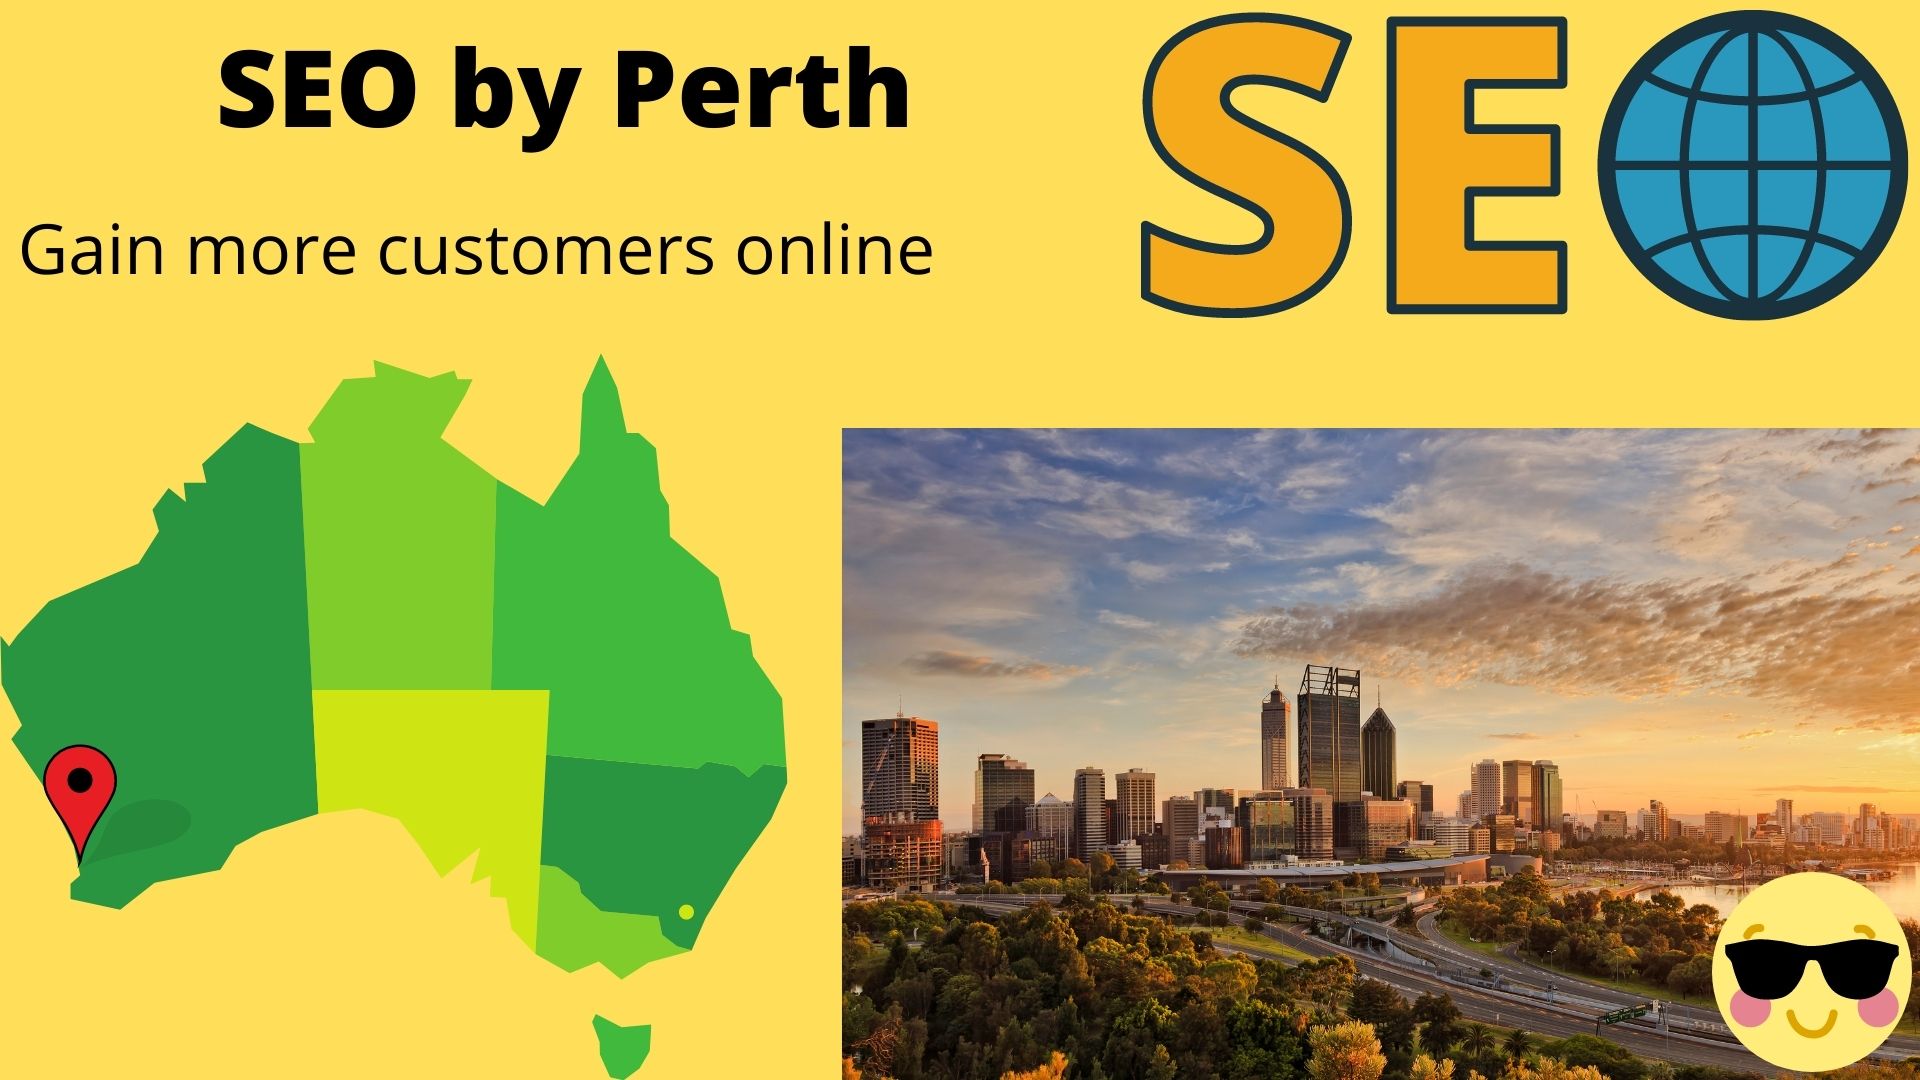 SEO by Australian City - Perth